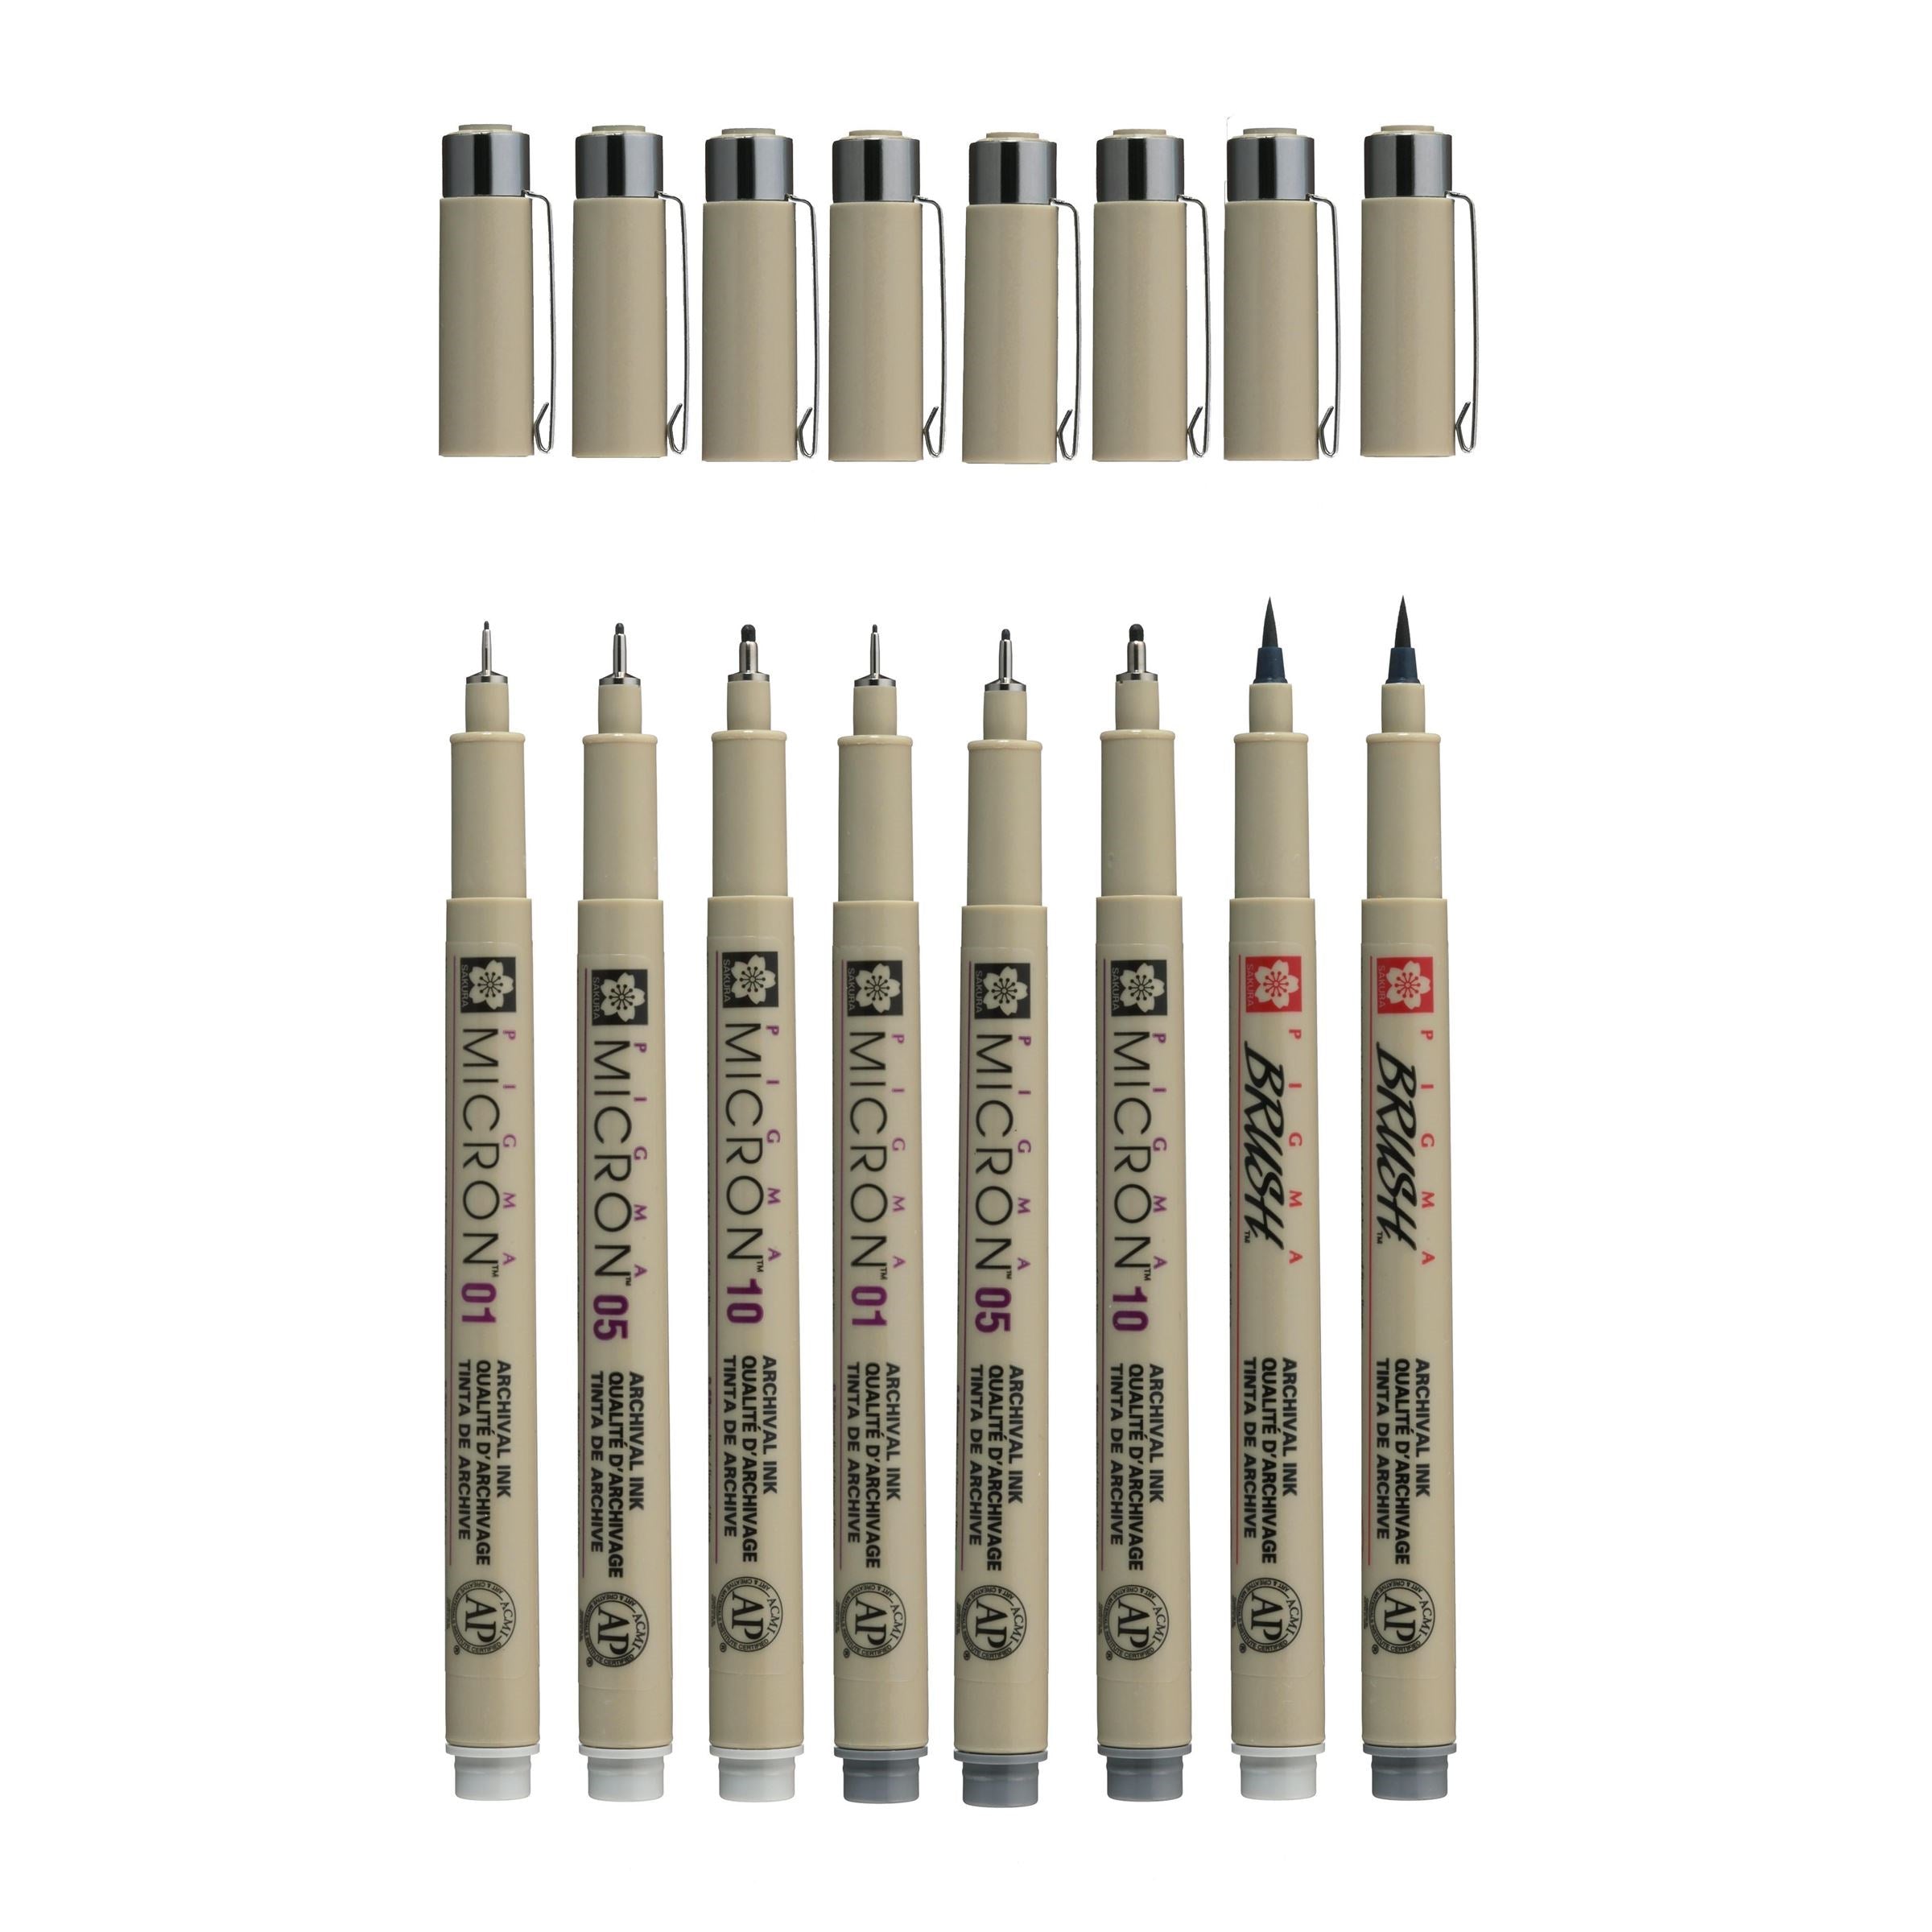 Pigma Micron fineliner set | 8 pens, Light Cool Gray & Cool Gray